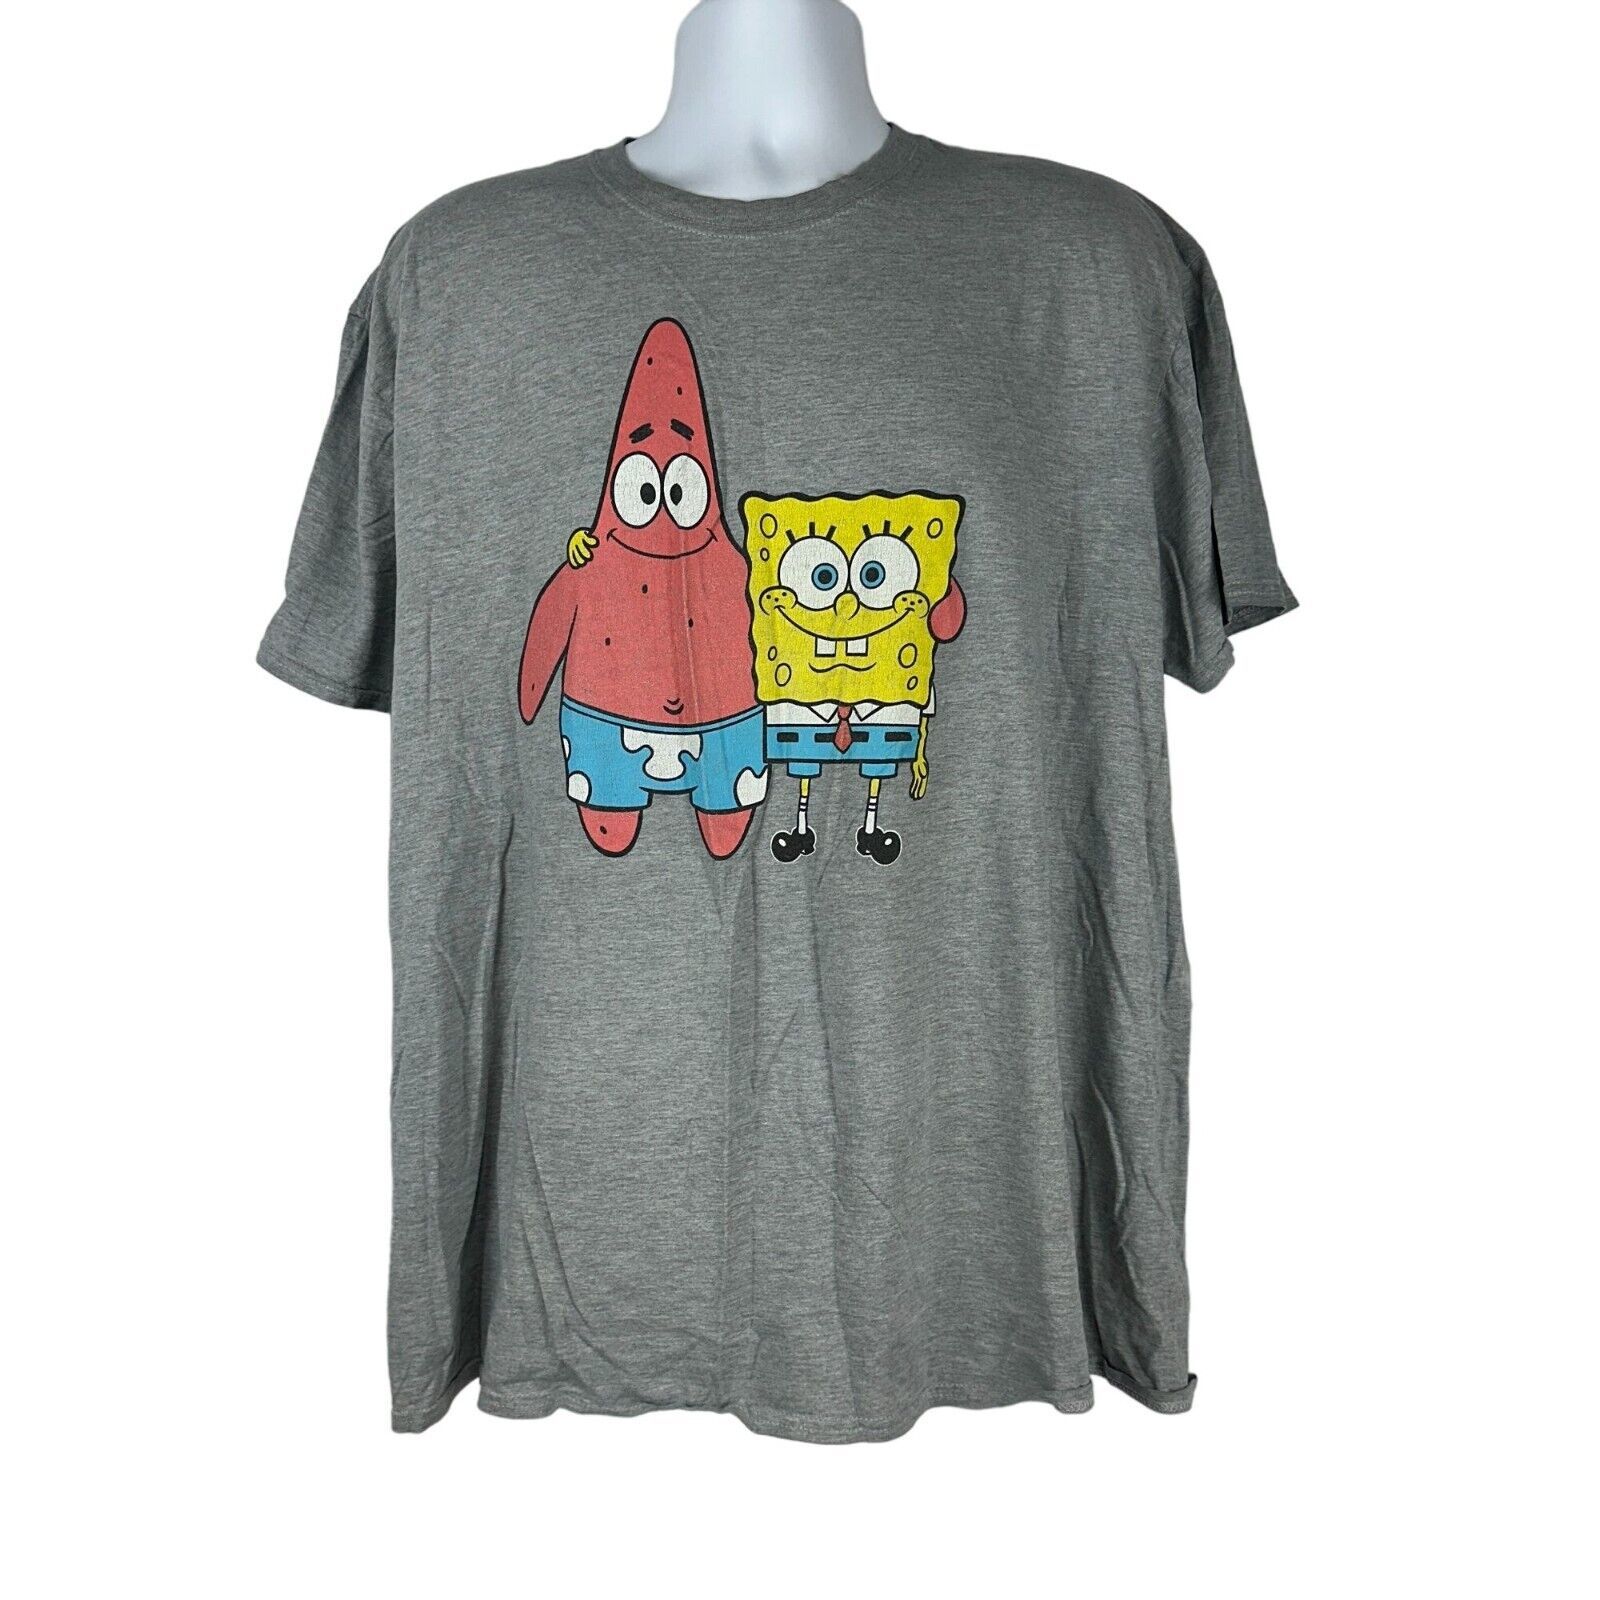 Primary image for Sponge Bob Square Pants Men's Short Sleeved Crew Neck T-Shirt Size 2XL